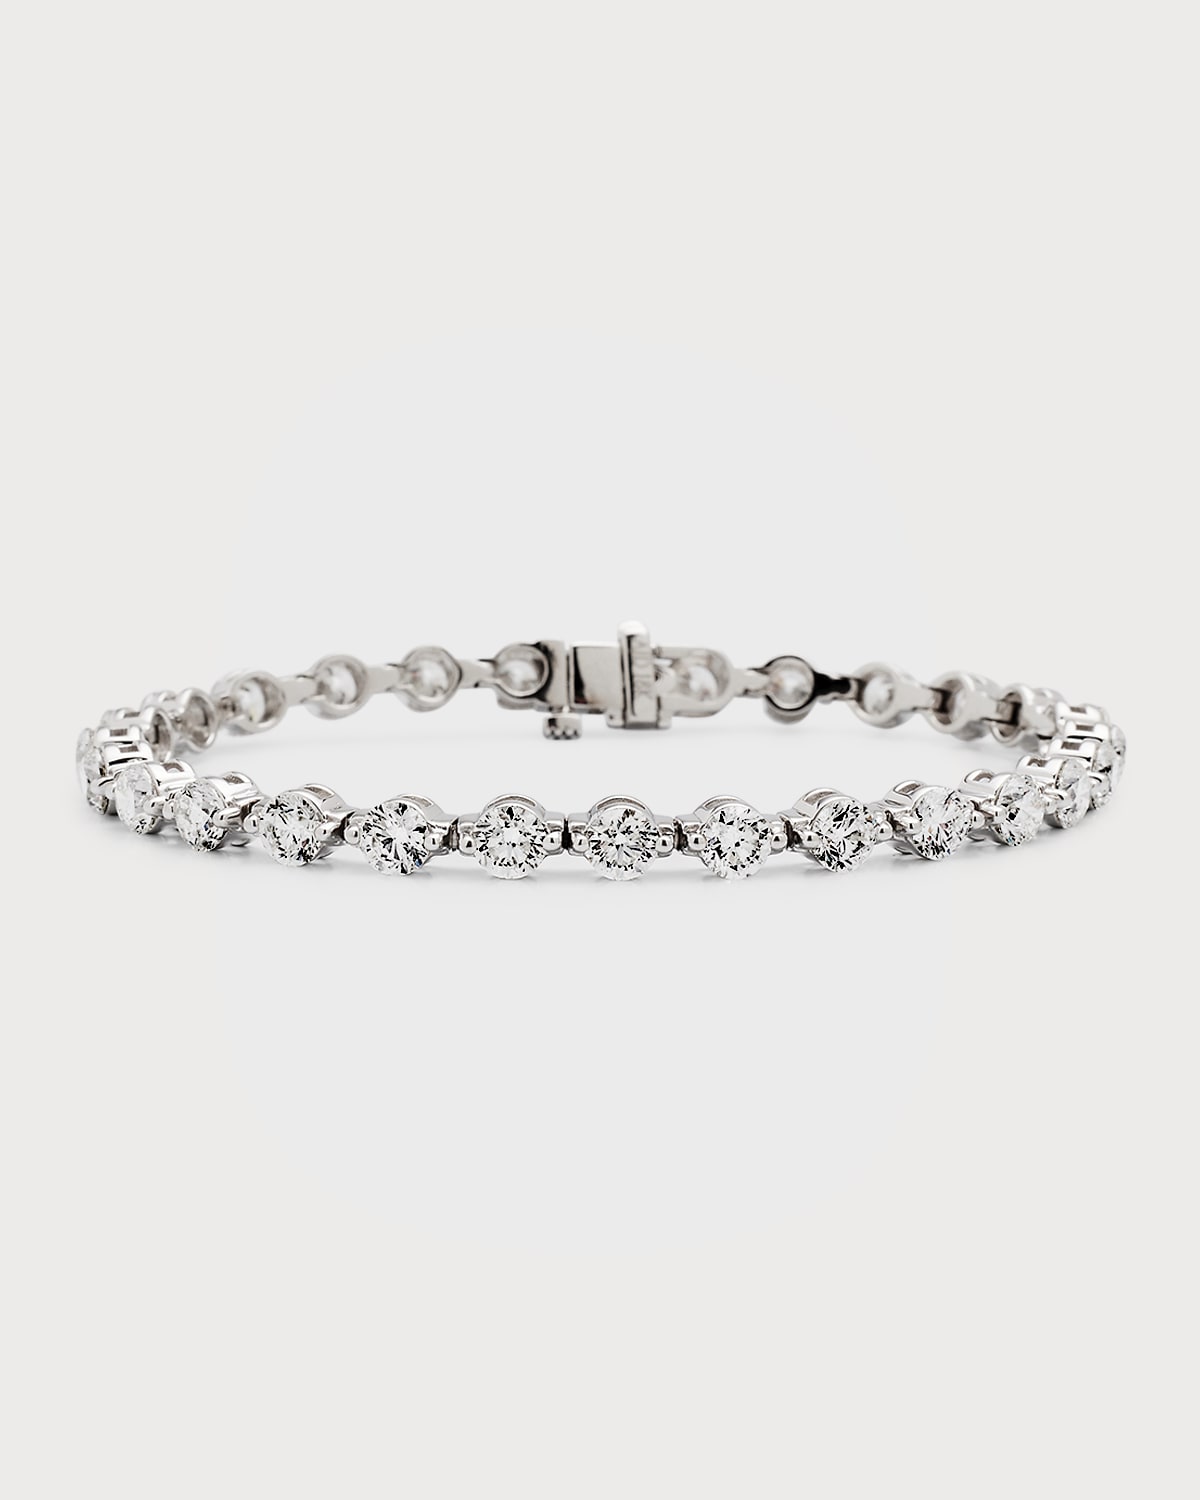 Neiman Marcus Diamonds 18k White Gold Diamond Bracelet, 7"l, 10.08tcw